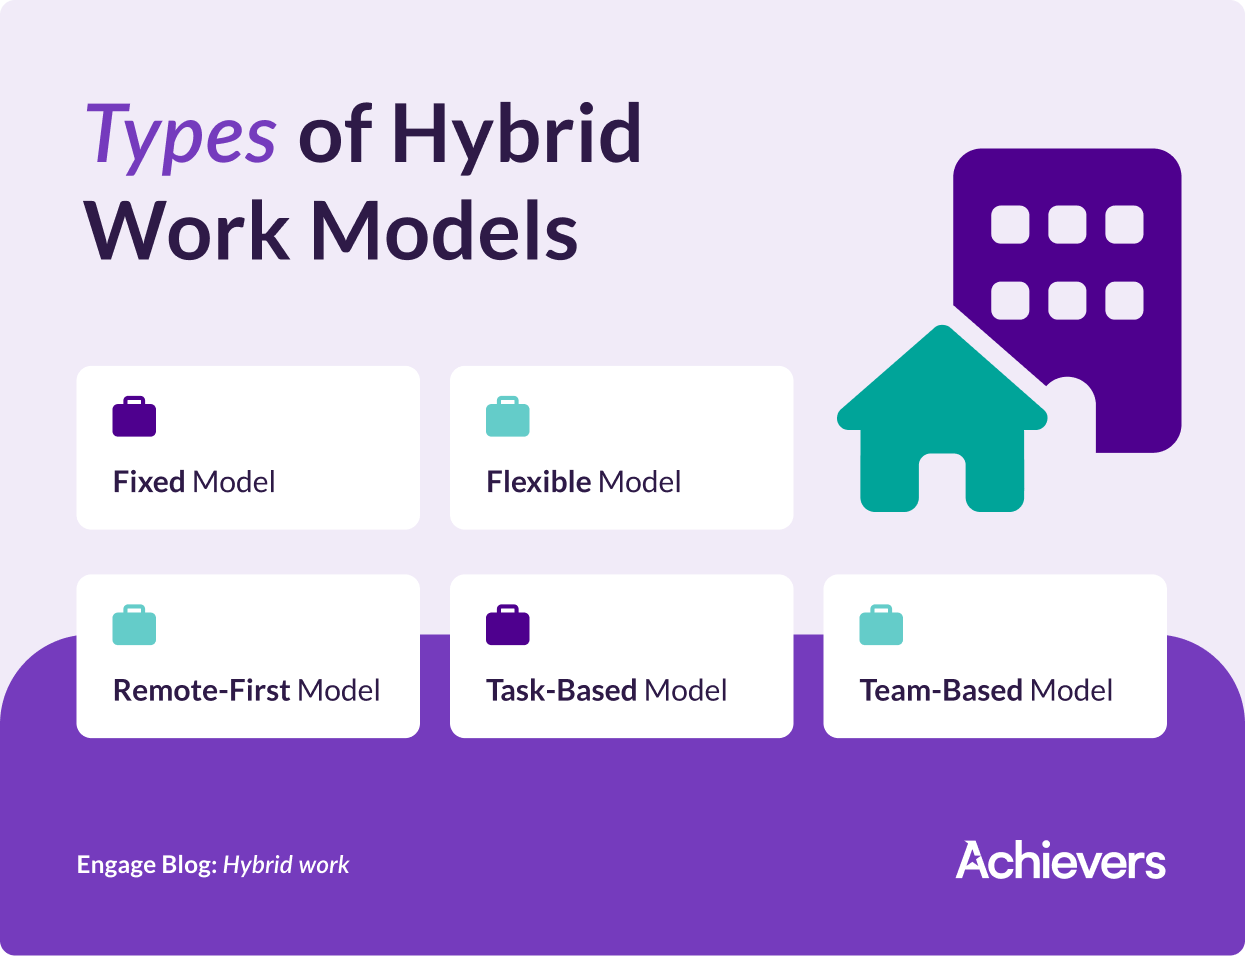 Types of hybrid work models